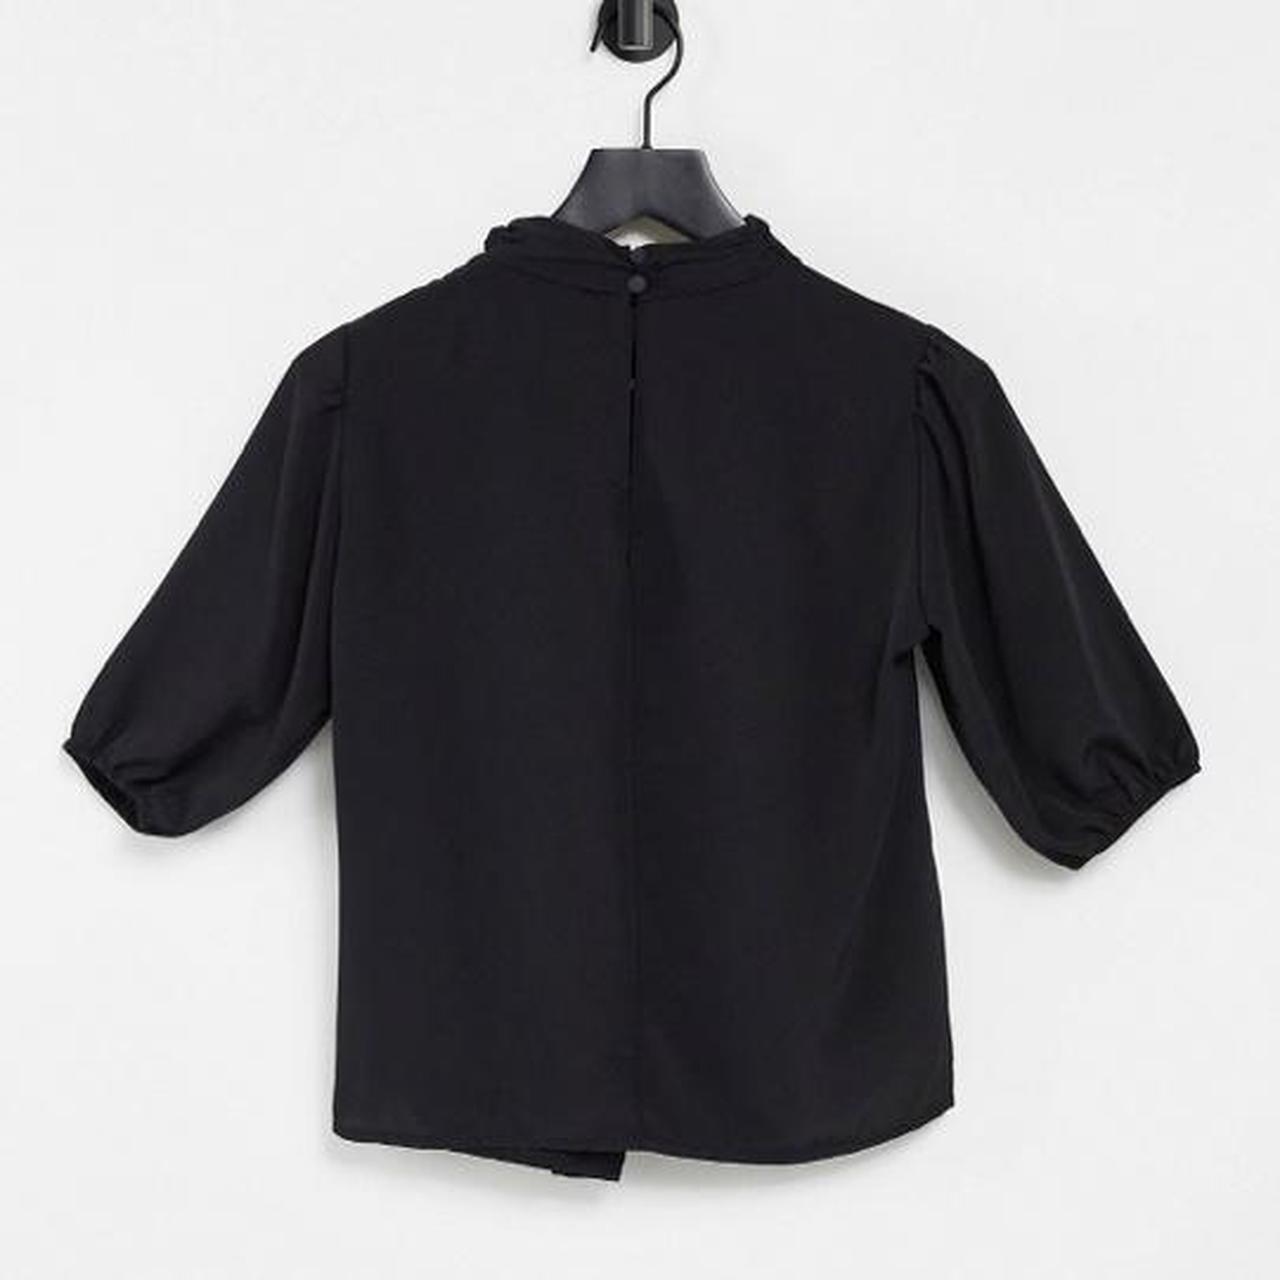 Product Image 2 - ASOS drape neck blouse /